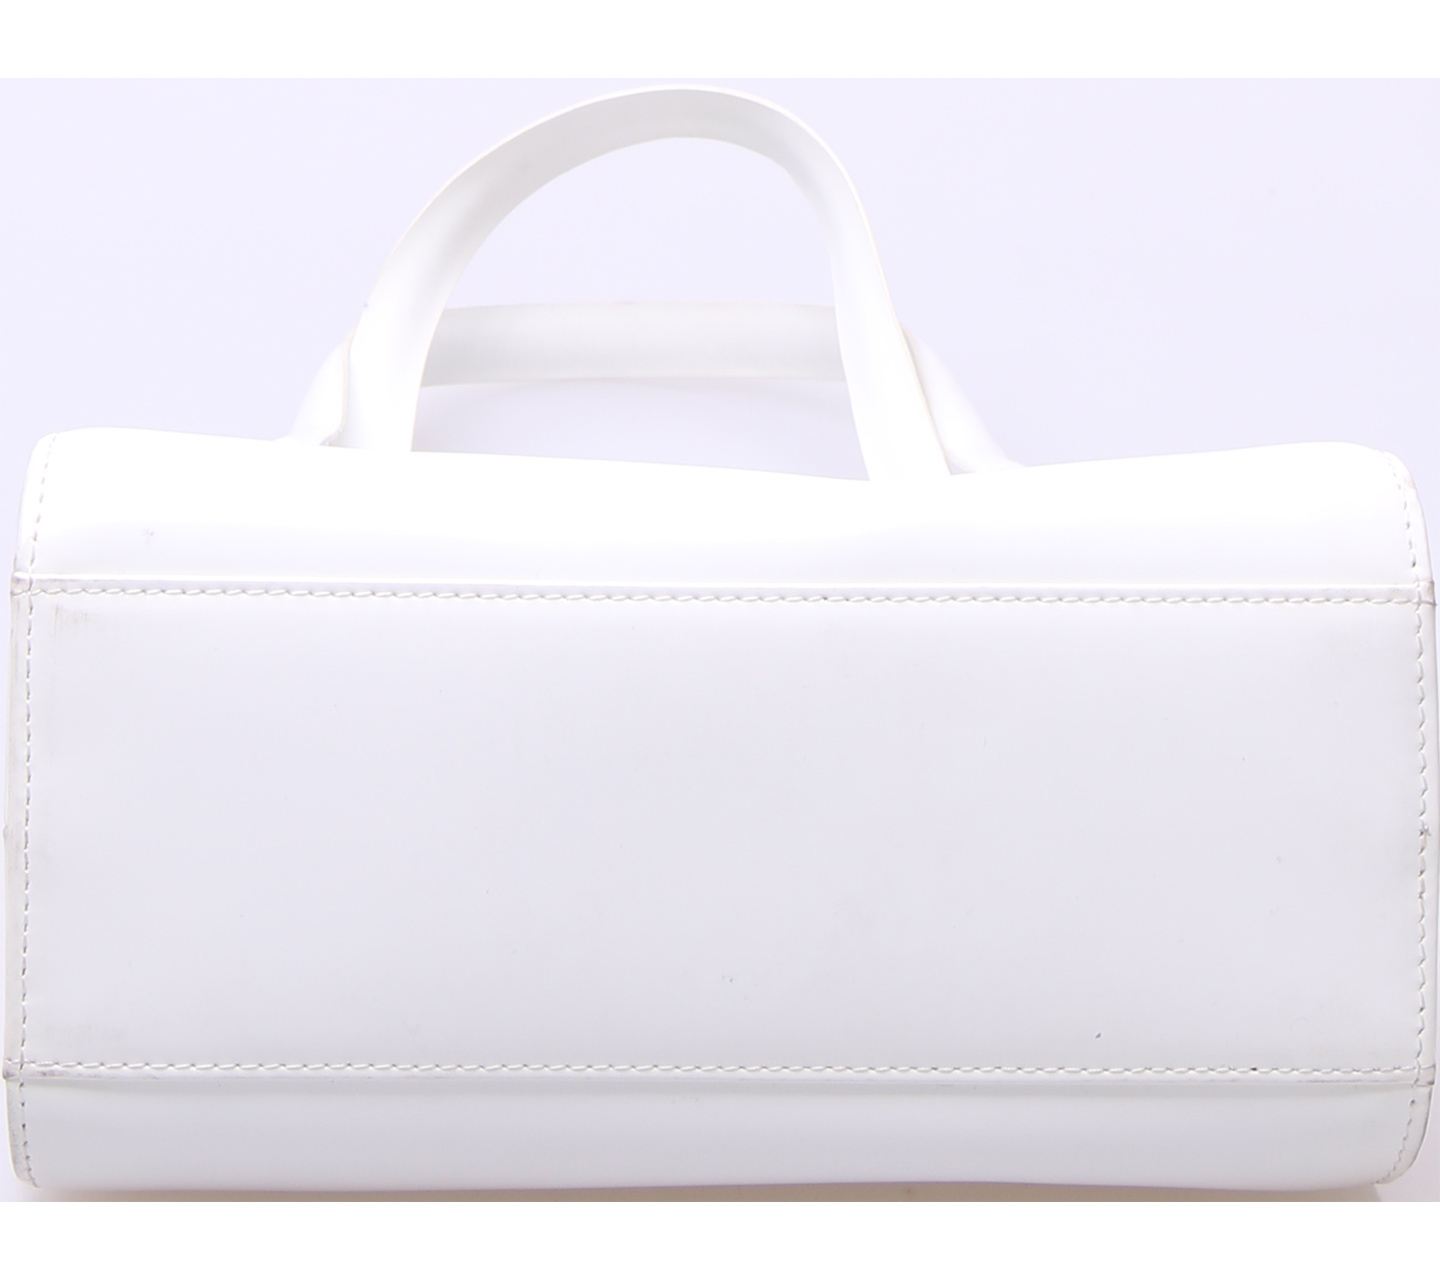 Braun Buffle White Handbag